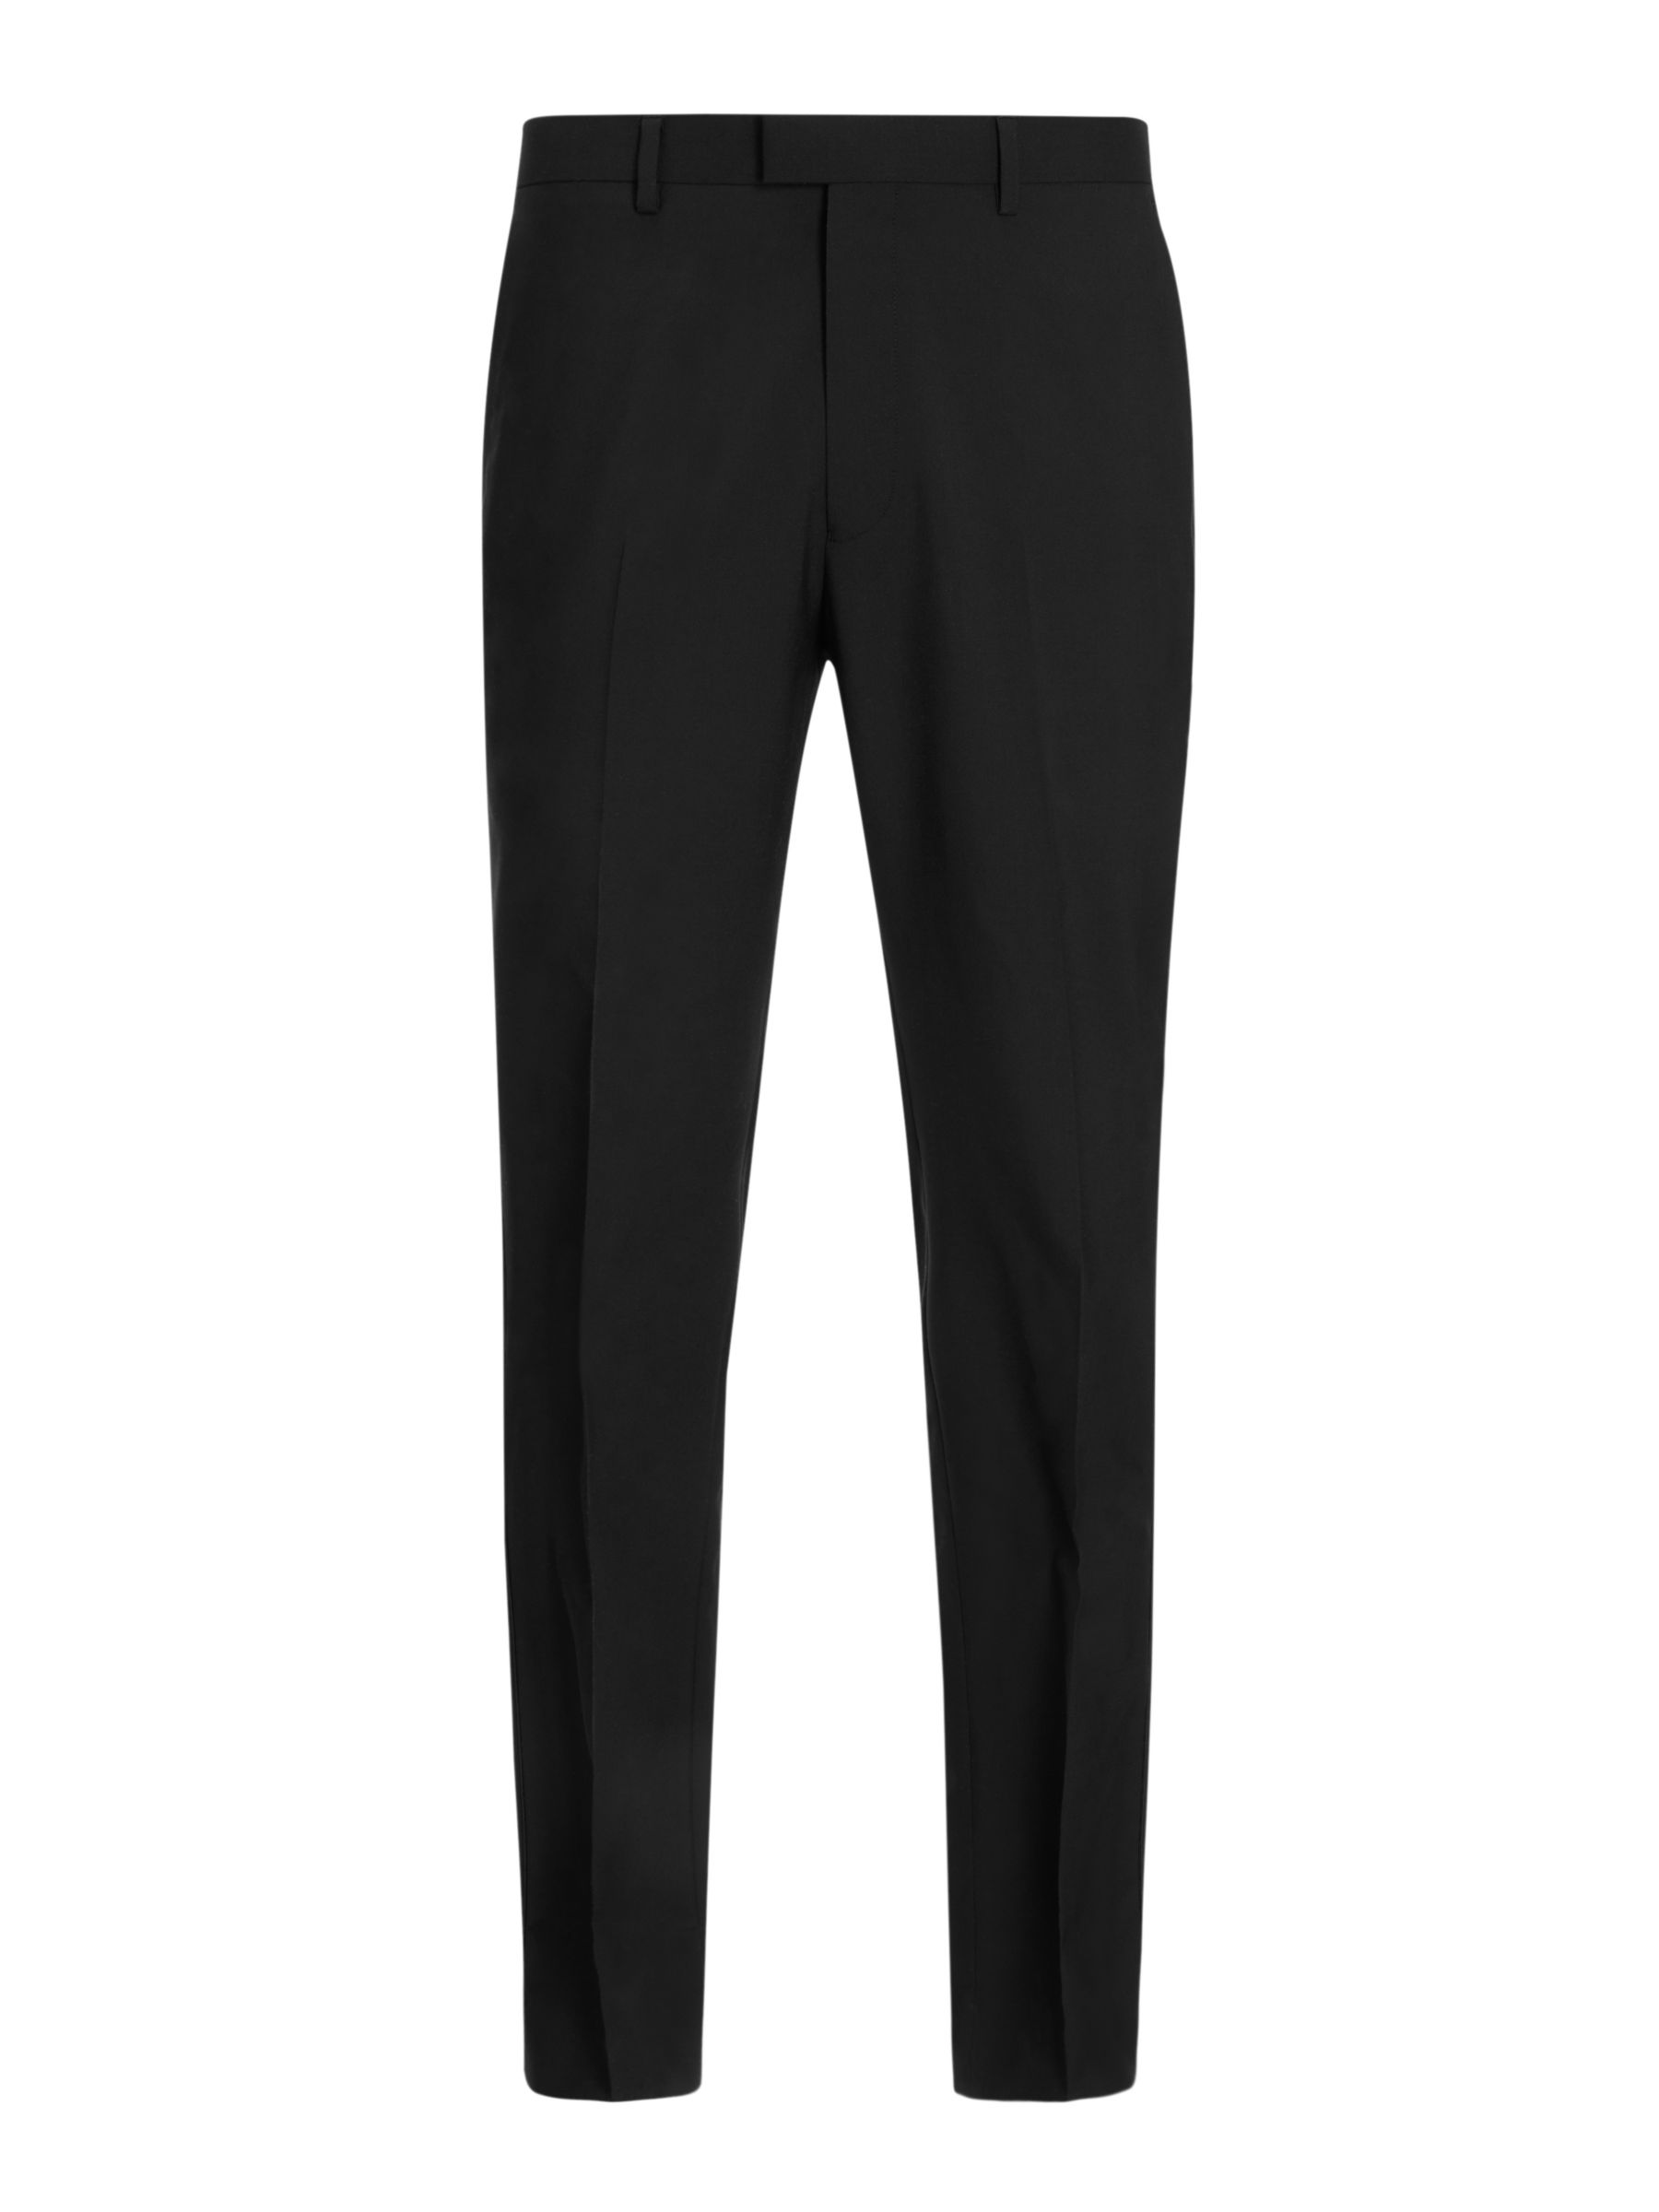 Kin Wool Slim Fit Dress Suit Trousers, Black at John Lewis & Partners